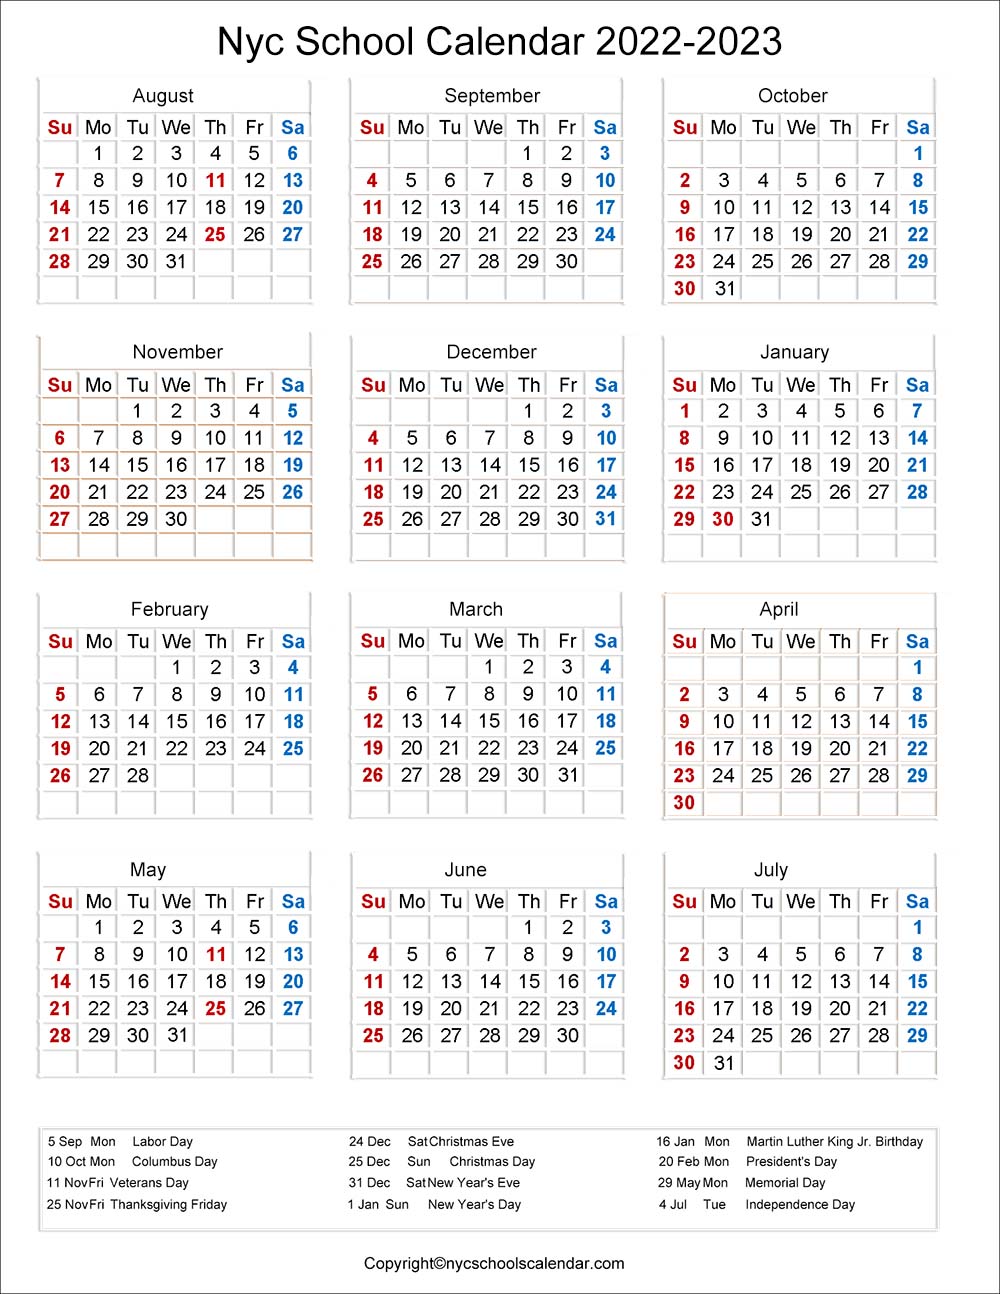 Nyc Doe Calendar 2022 23 Pdf ❤️Nyc School Holidays Calendar 2022-2023 ✓